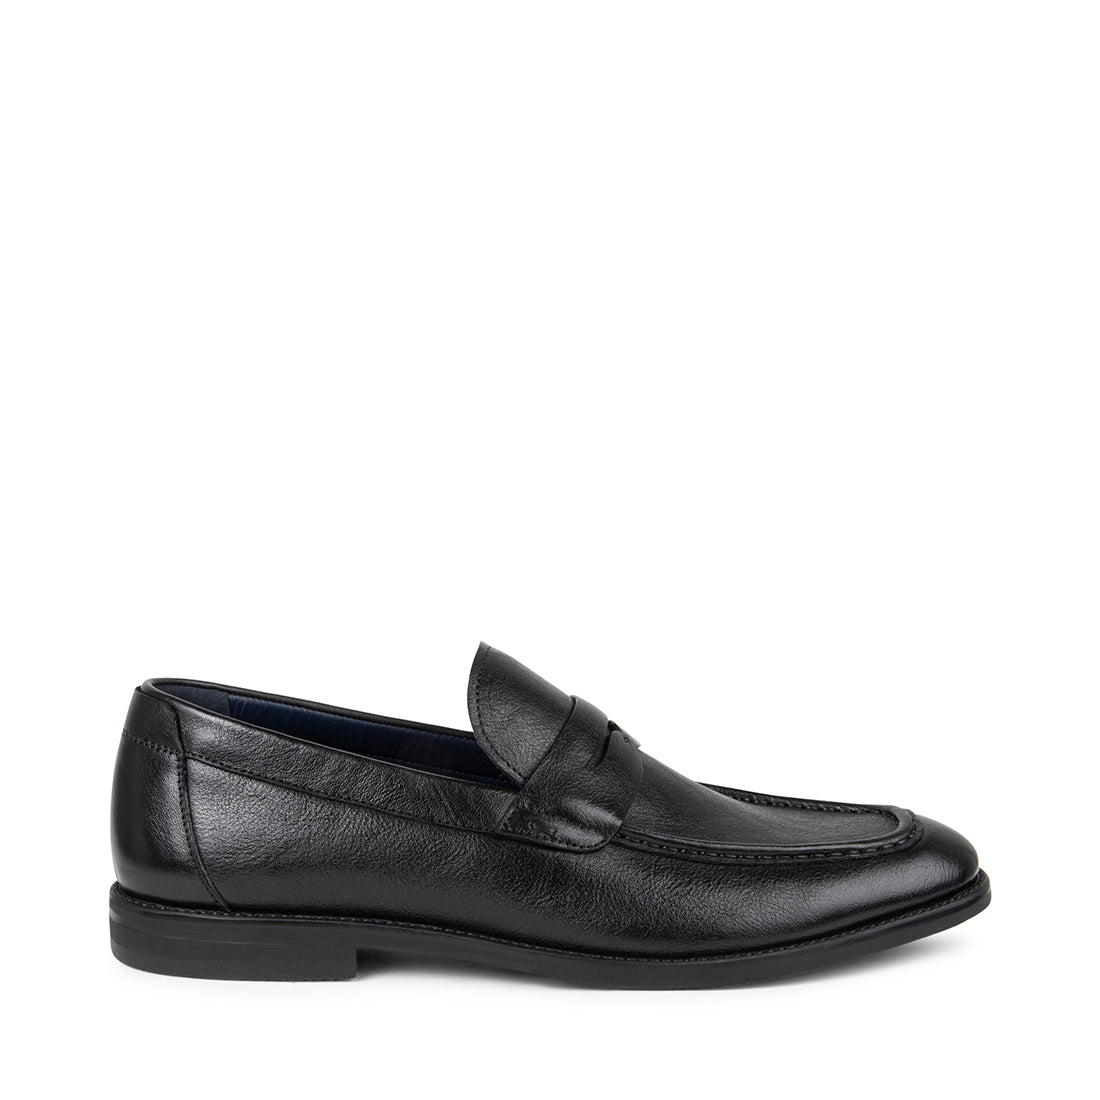 YANKO Black Leather Slip On Loafers | Men's Designer Dress Shoes ...